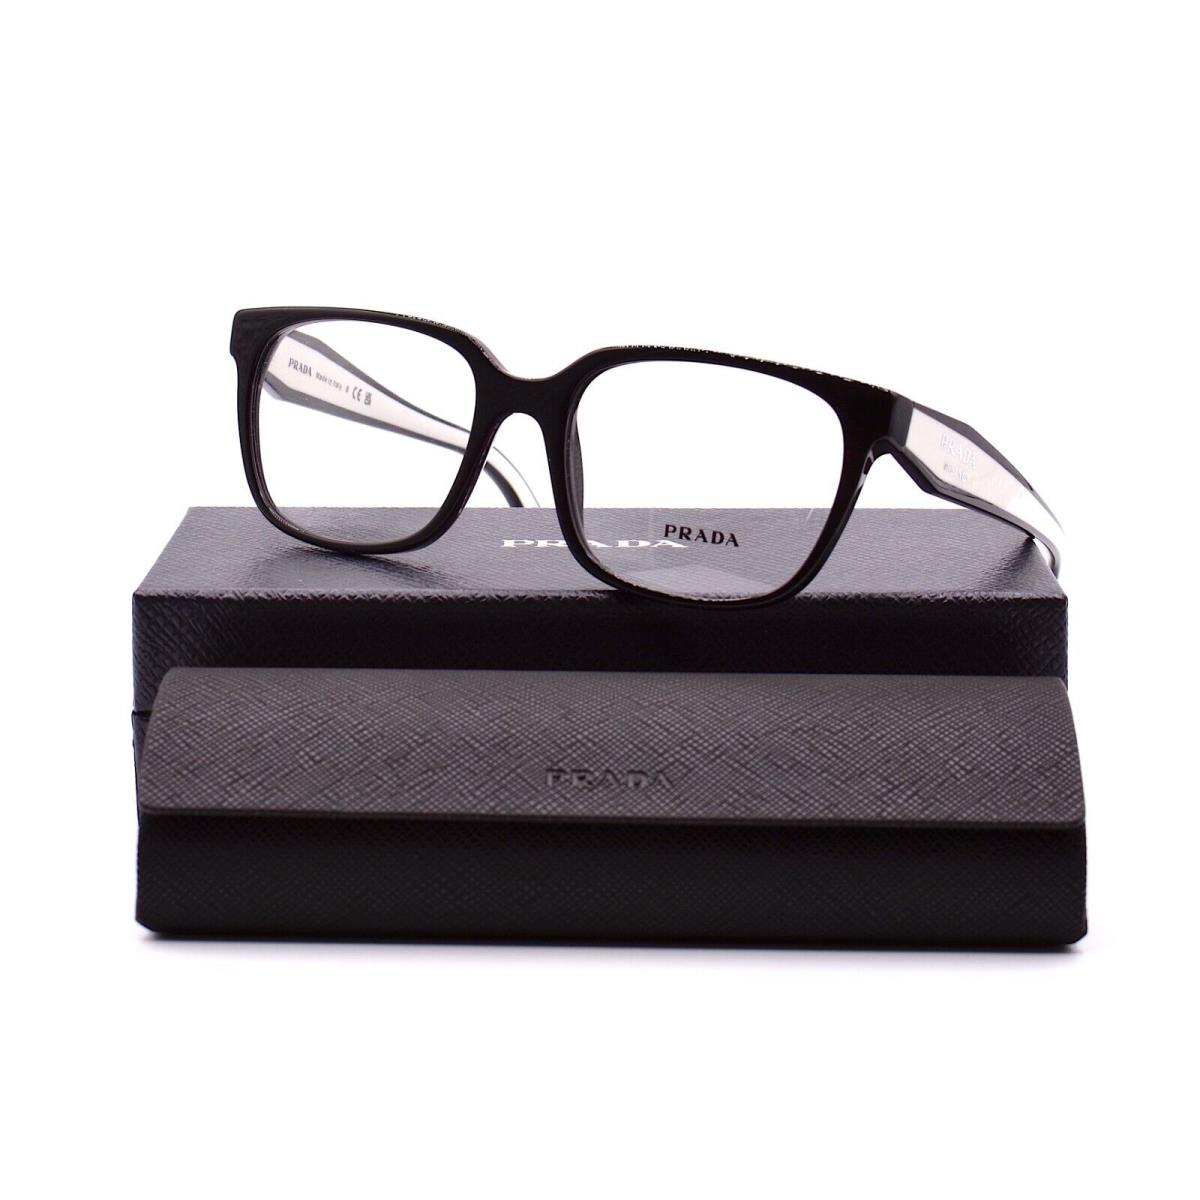 Prada eyeglasses  - Frame: Black 9